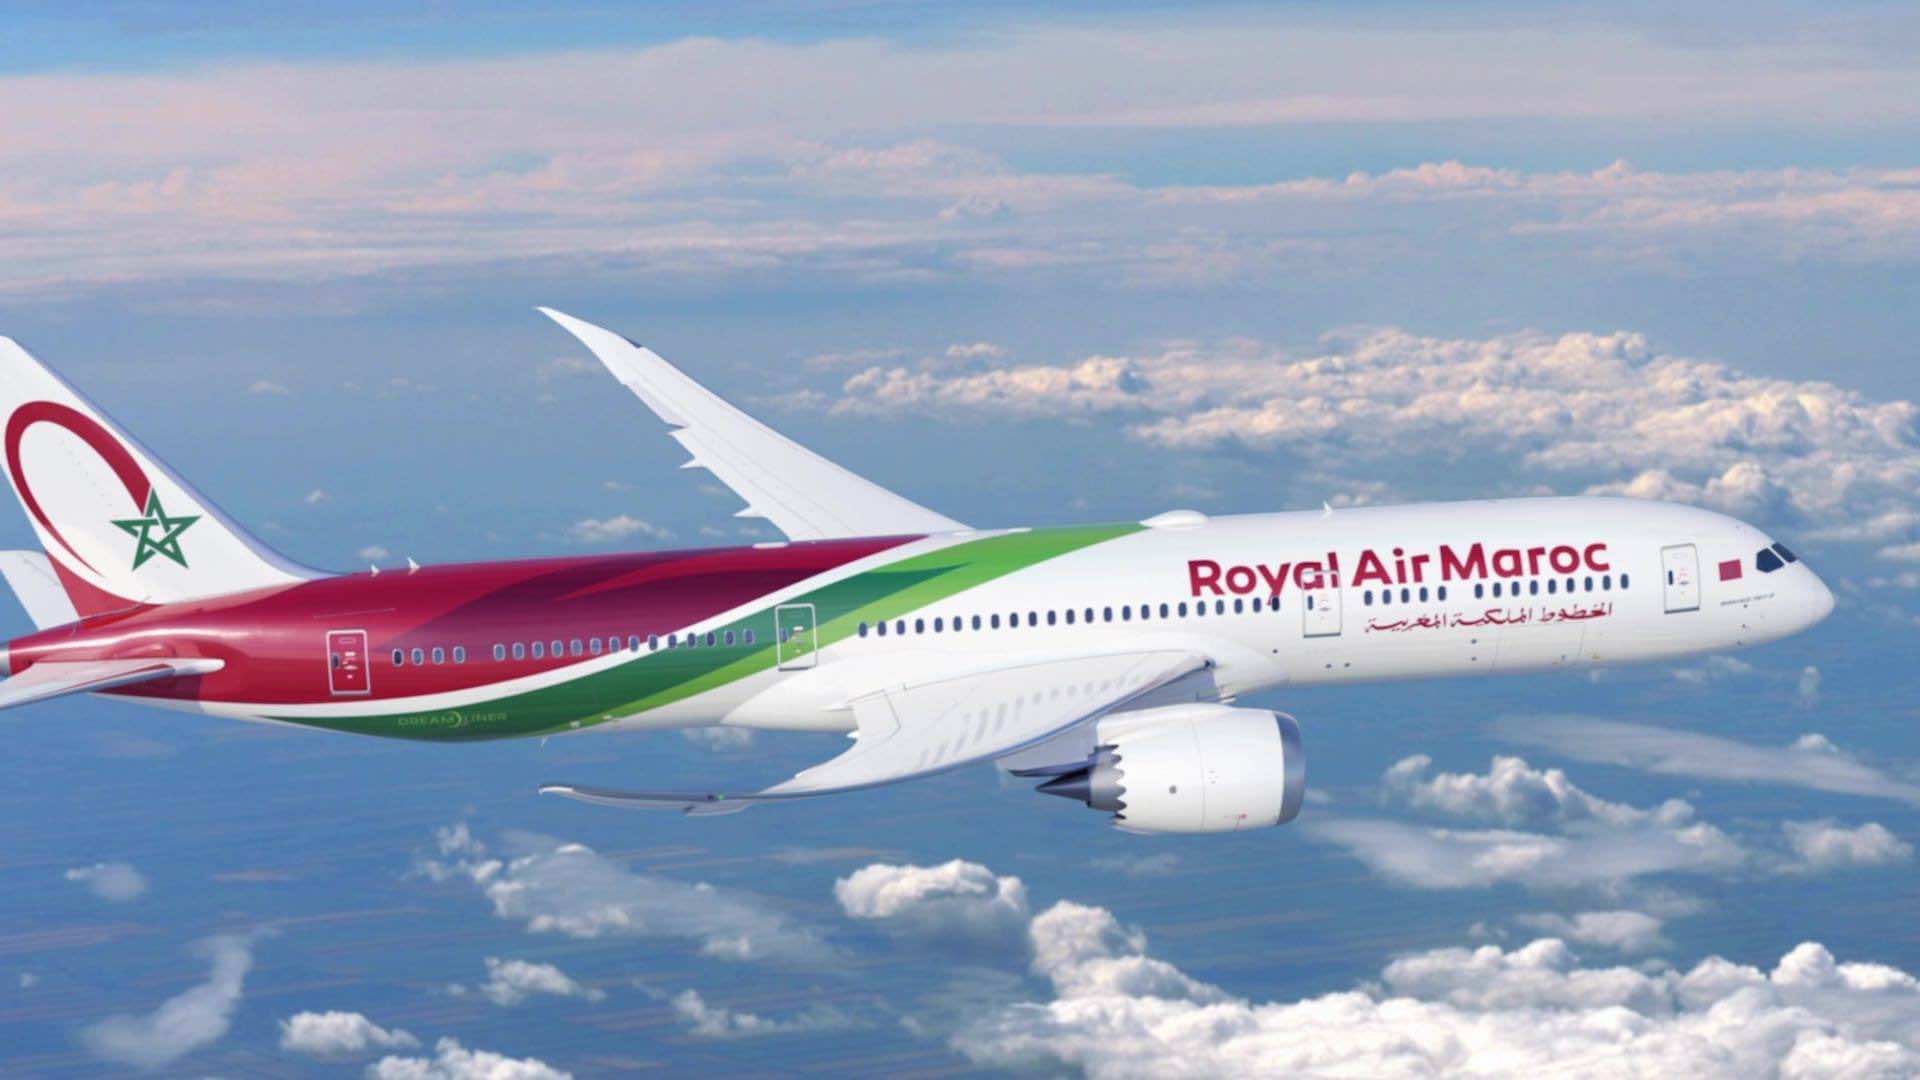 Royal Air Maroc to Serve 23 International Destinations Starting July 15